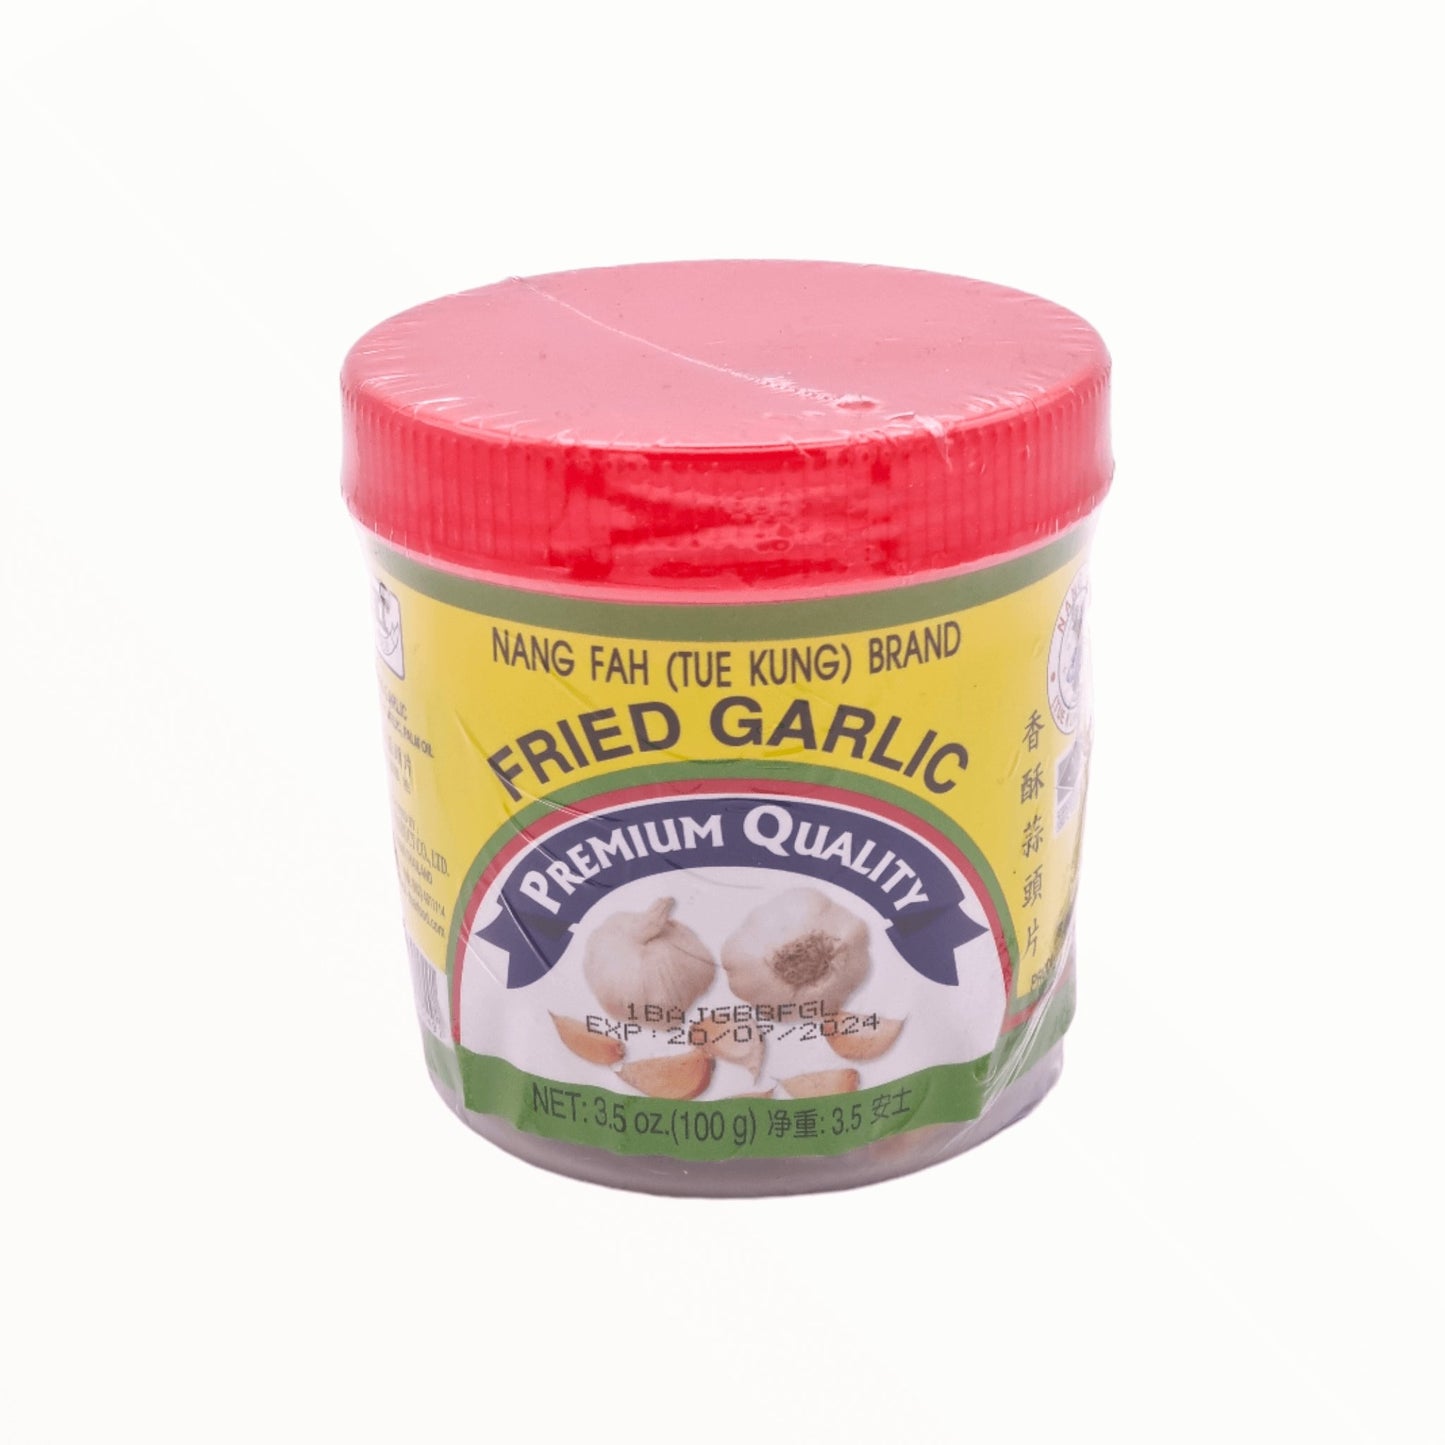 Fried Garlic gerösteter Knoblauch 100g - Mabuhay Pinoy Asia Shop